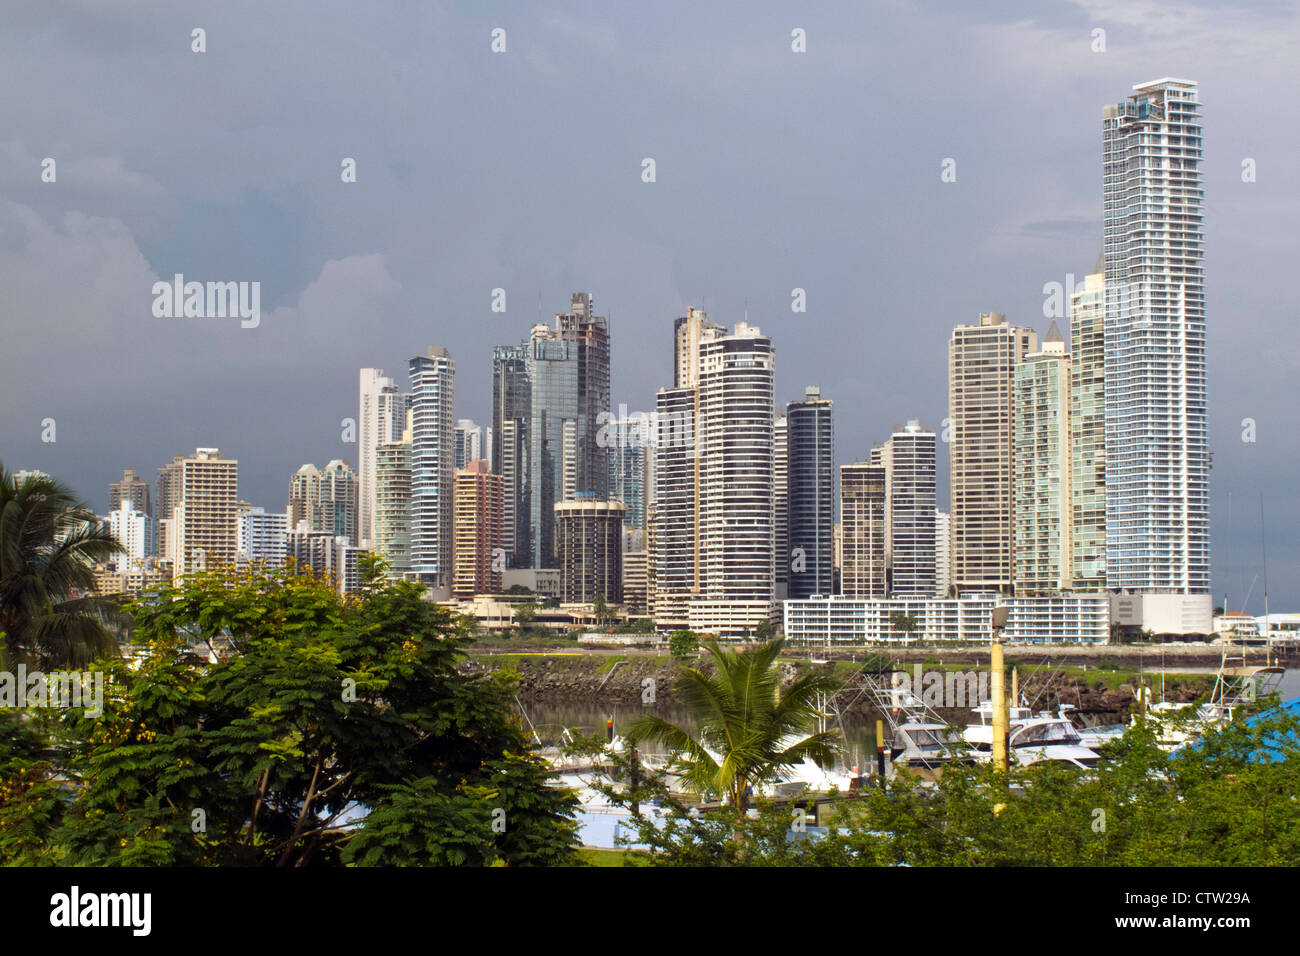 General view of sky scrapers / skyline, Panama City, Panama Stock Photo